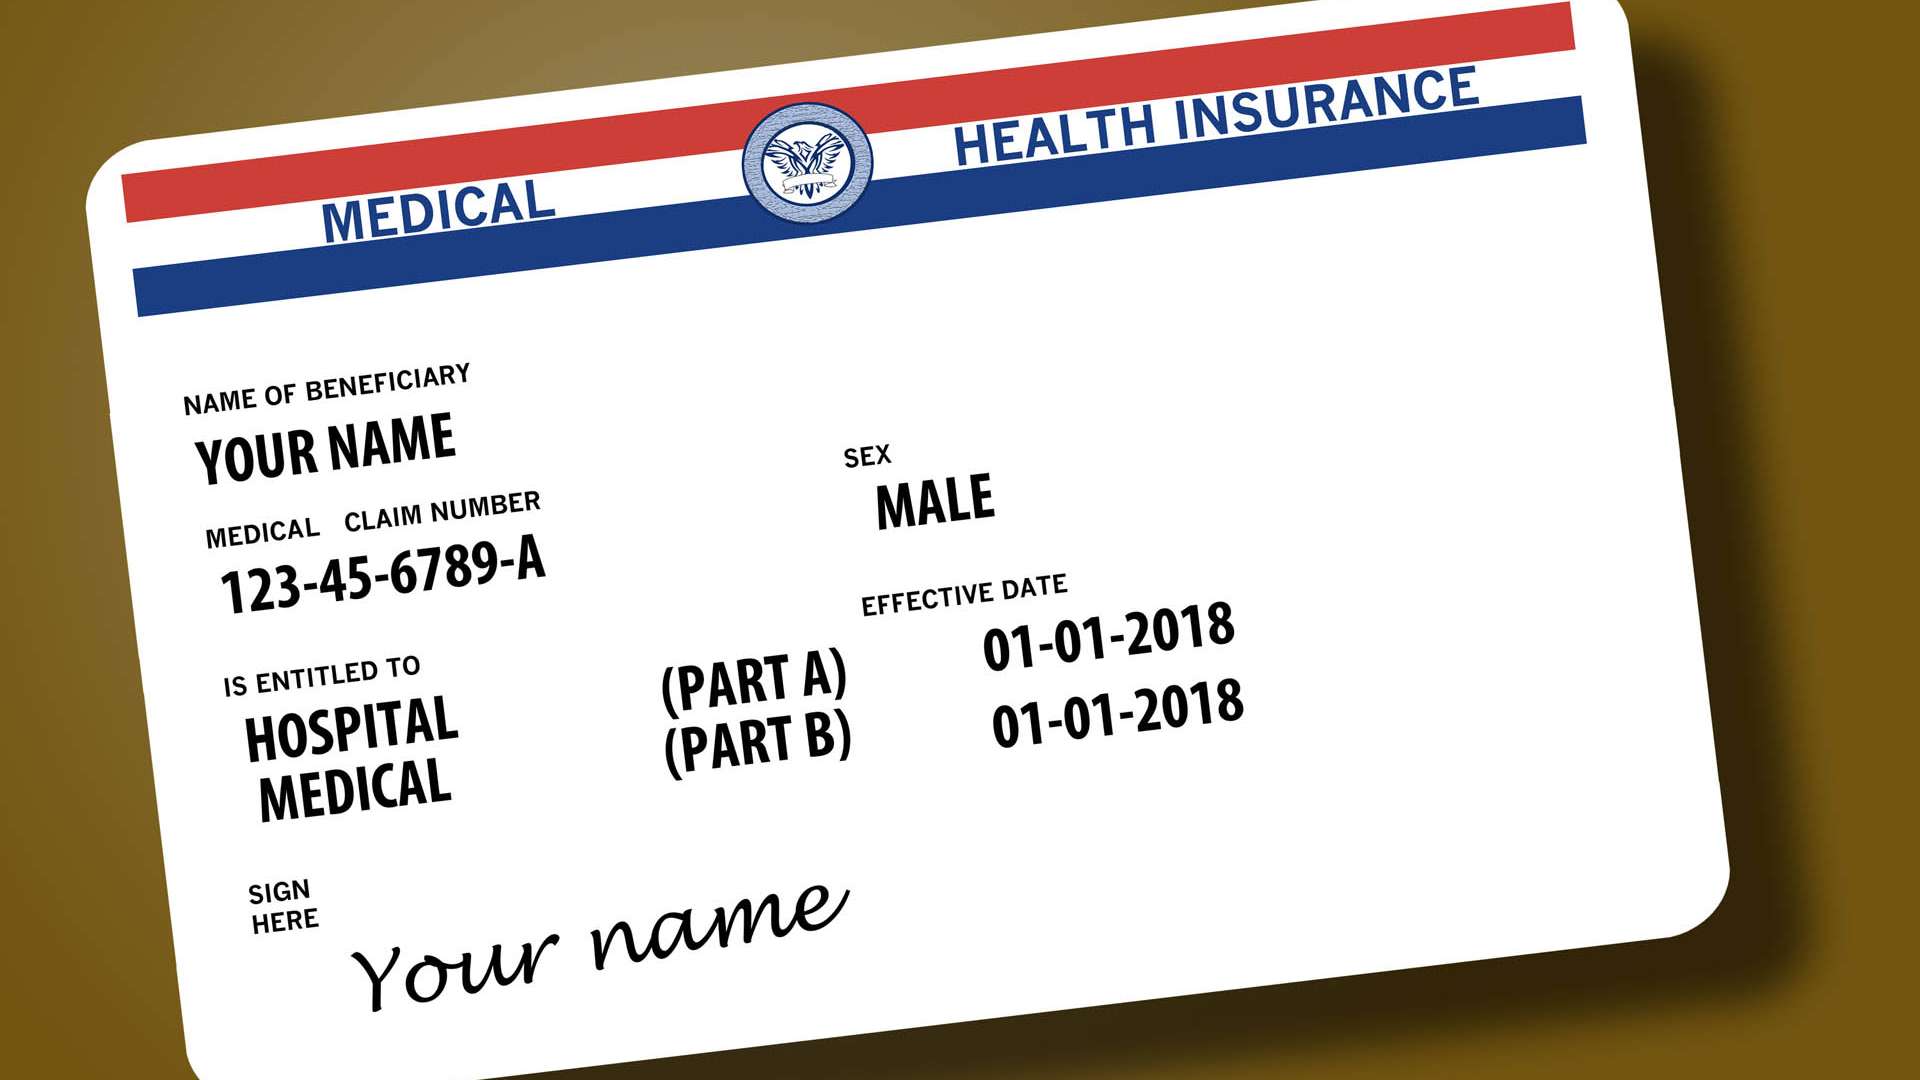 Medical health insurance card